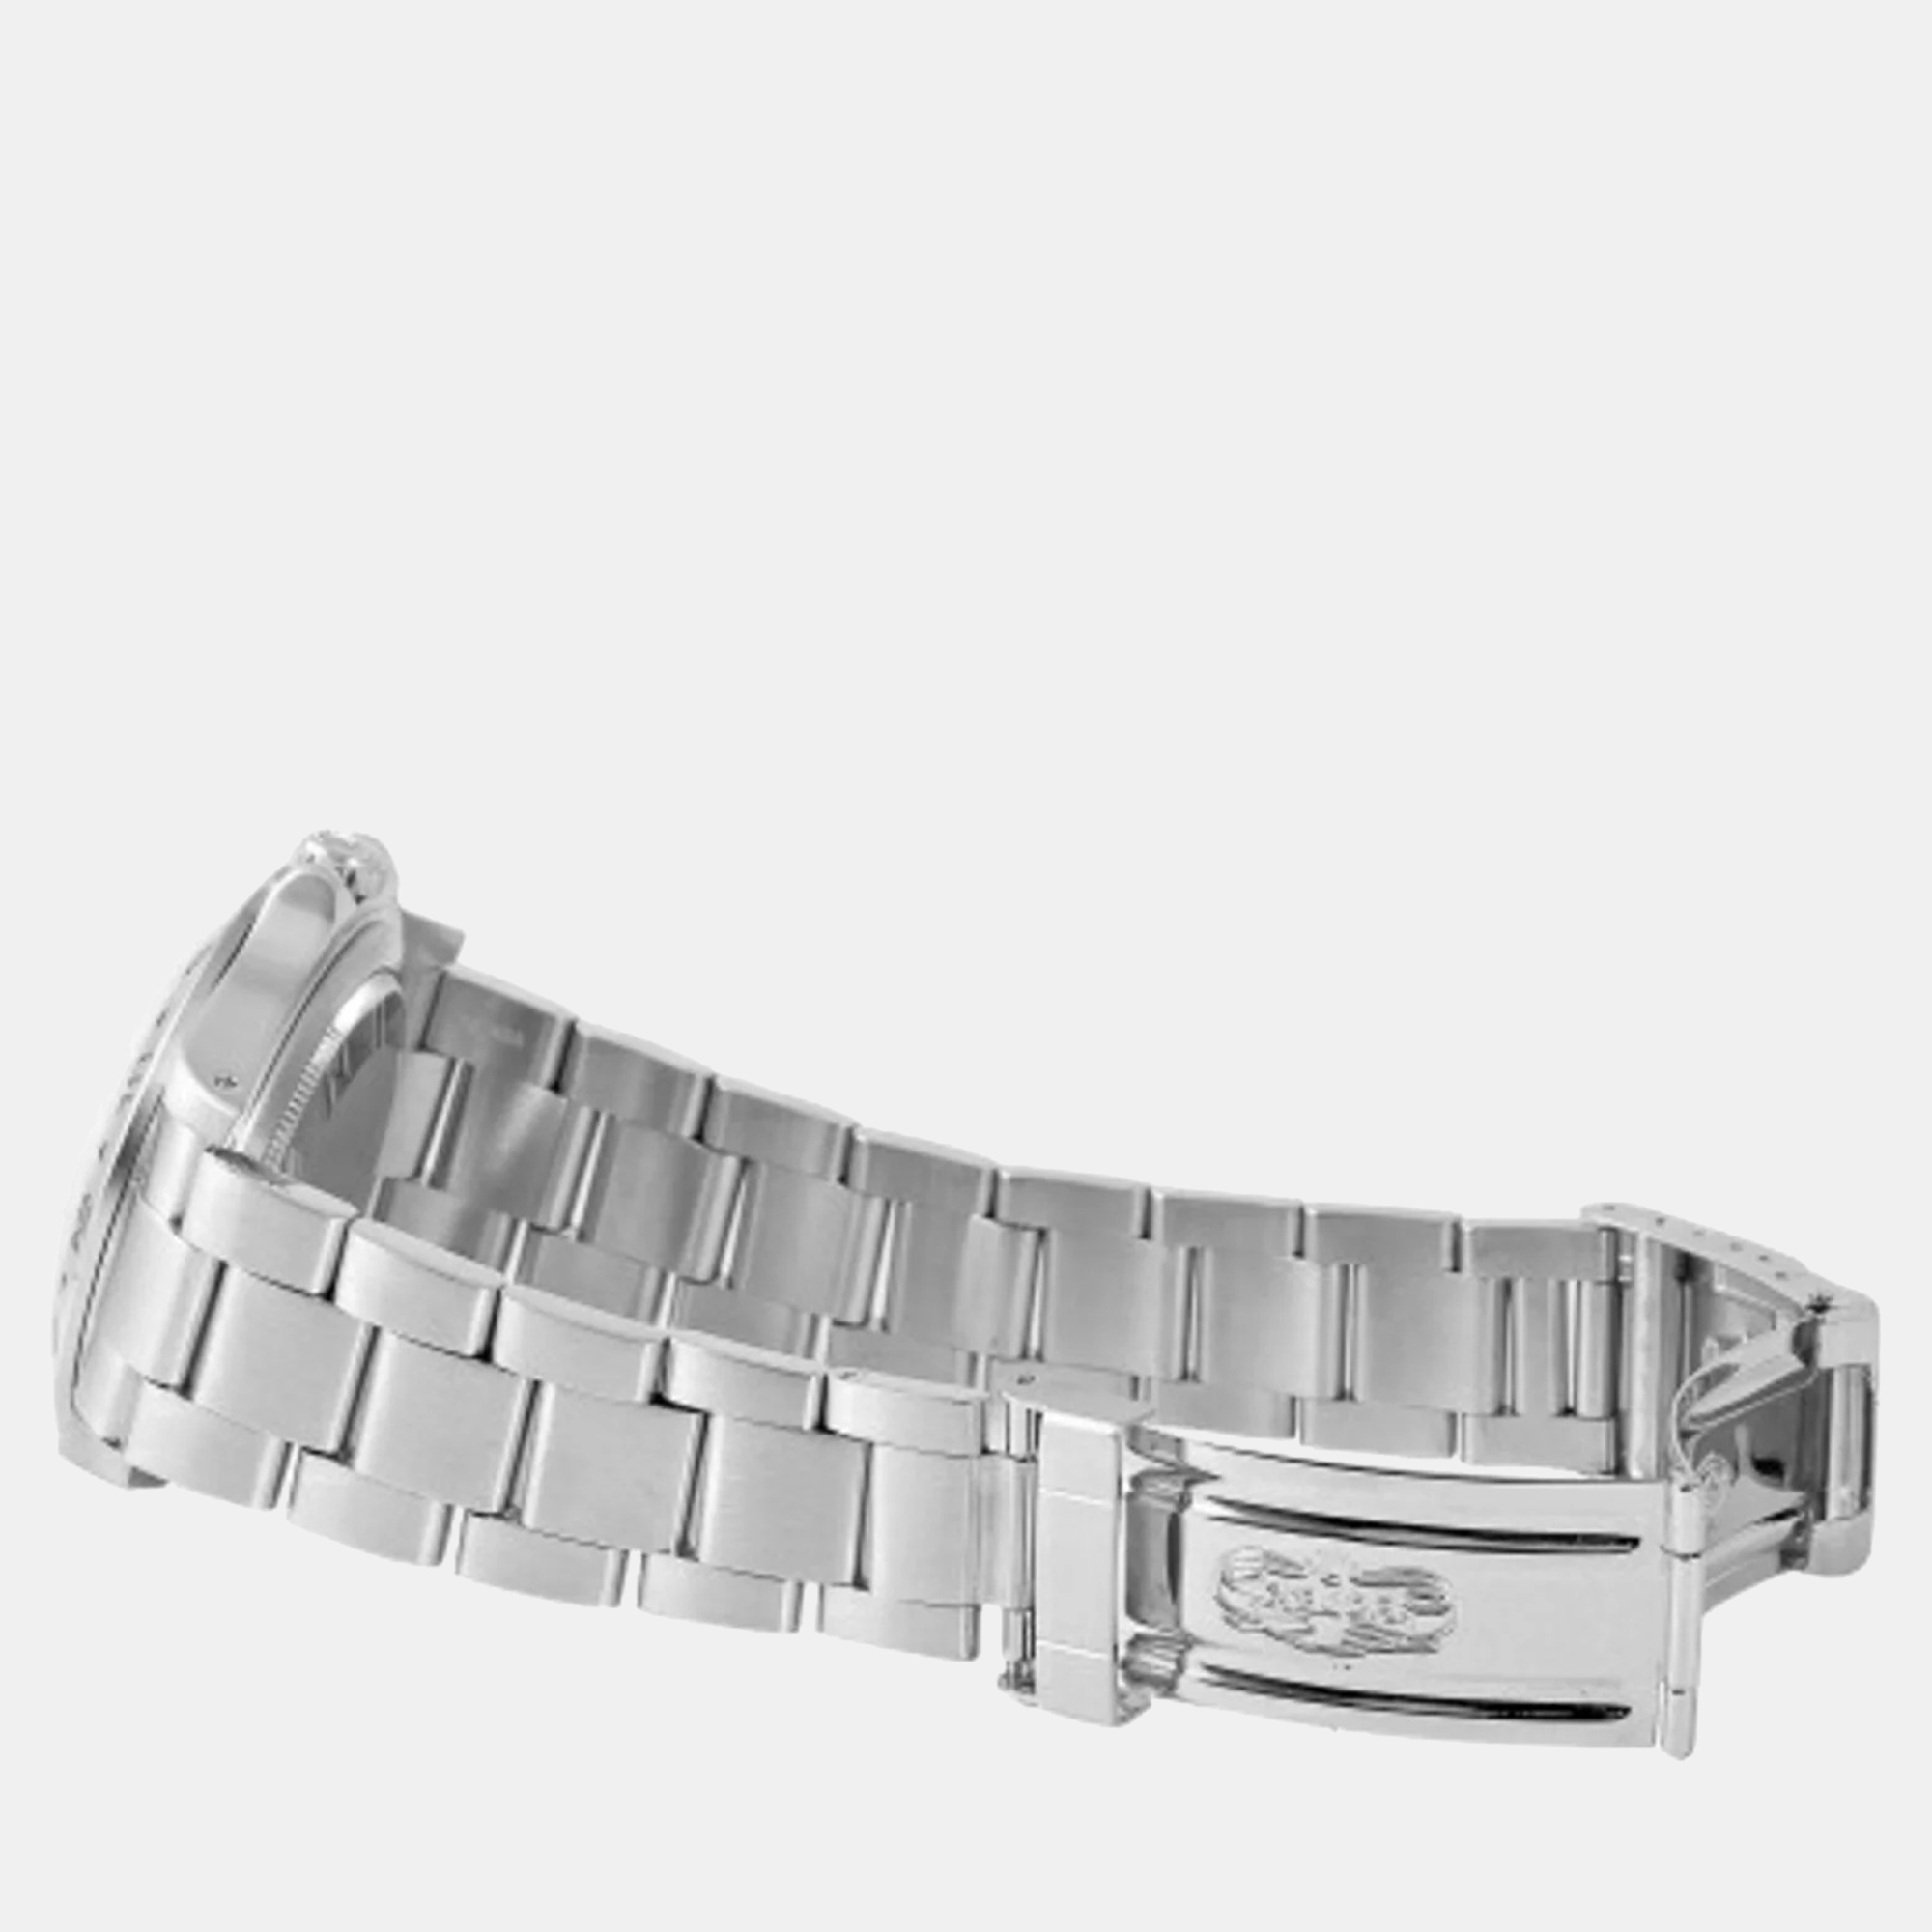 Rolex White Stainless Steel Explorer II 16570 Automatic Men's Wristwatch 40 Mm